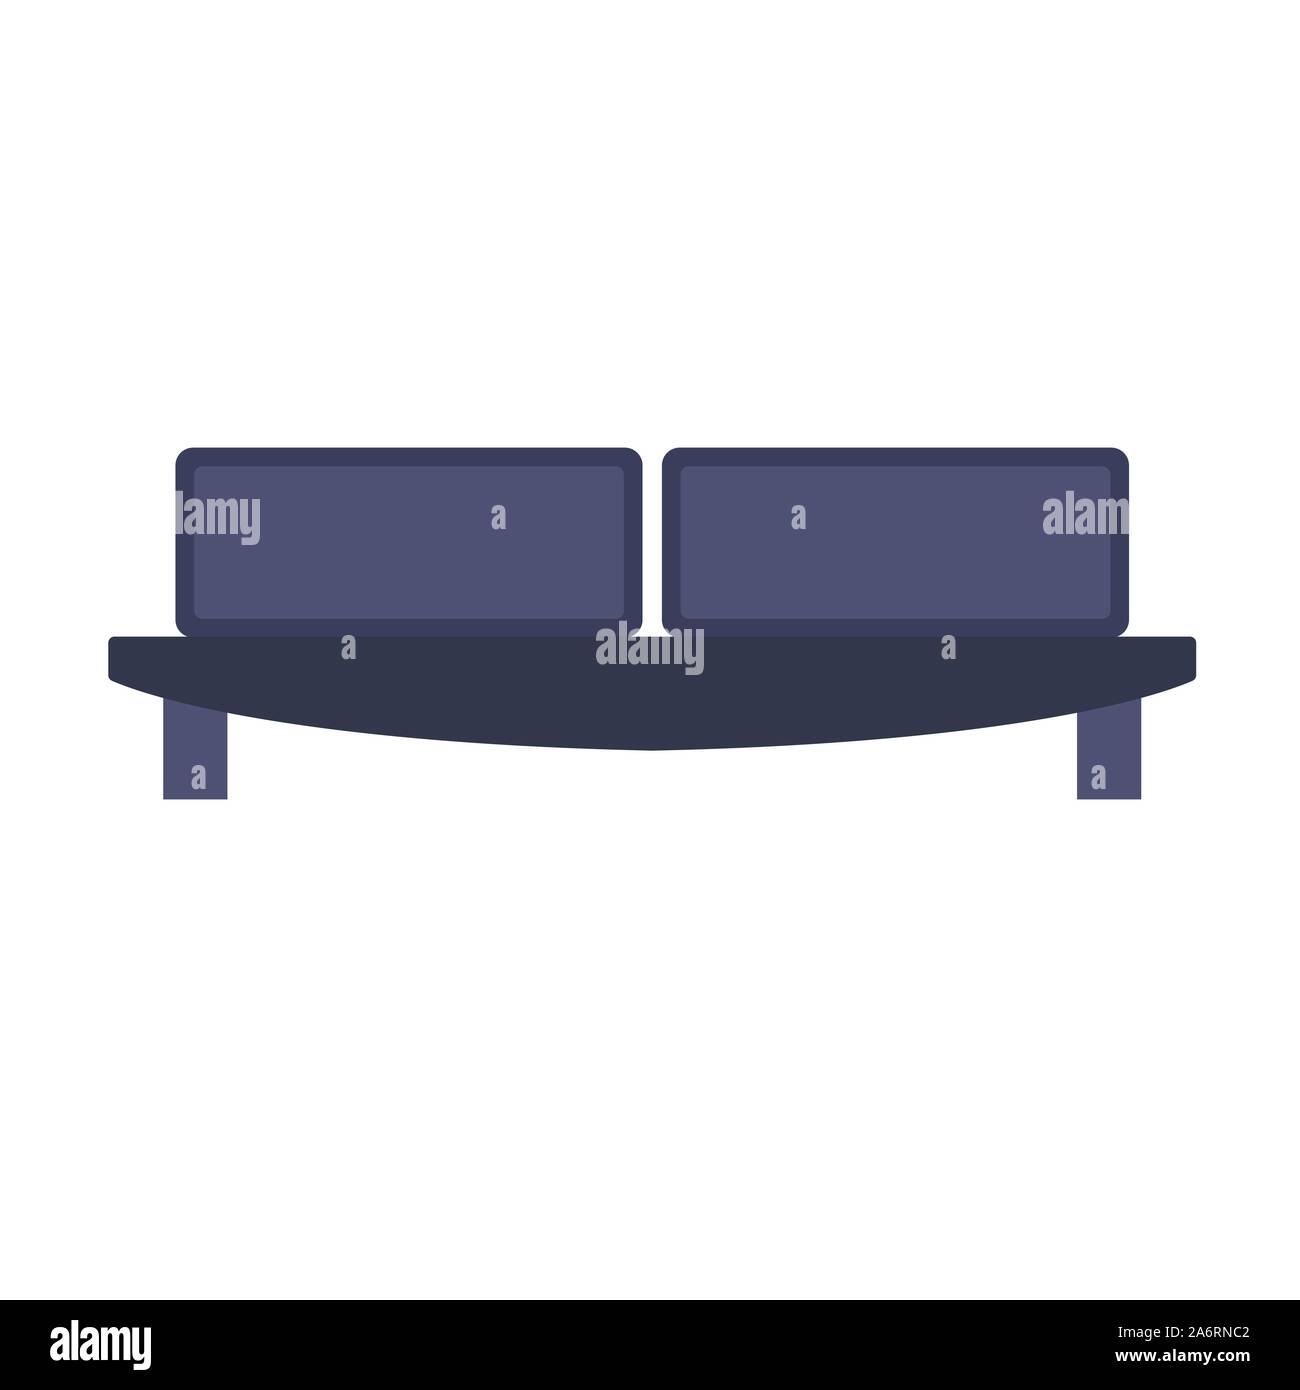 Sofa furniture vector icon front view illustration design. Living room interior seat element. Flat divan house cozy Stock Vector